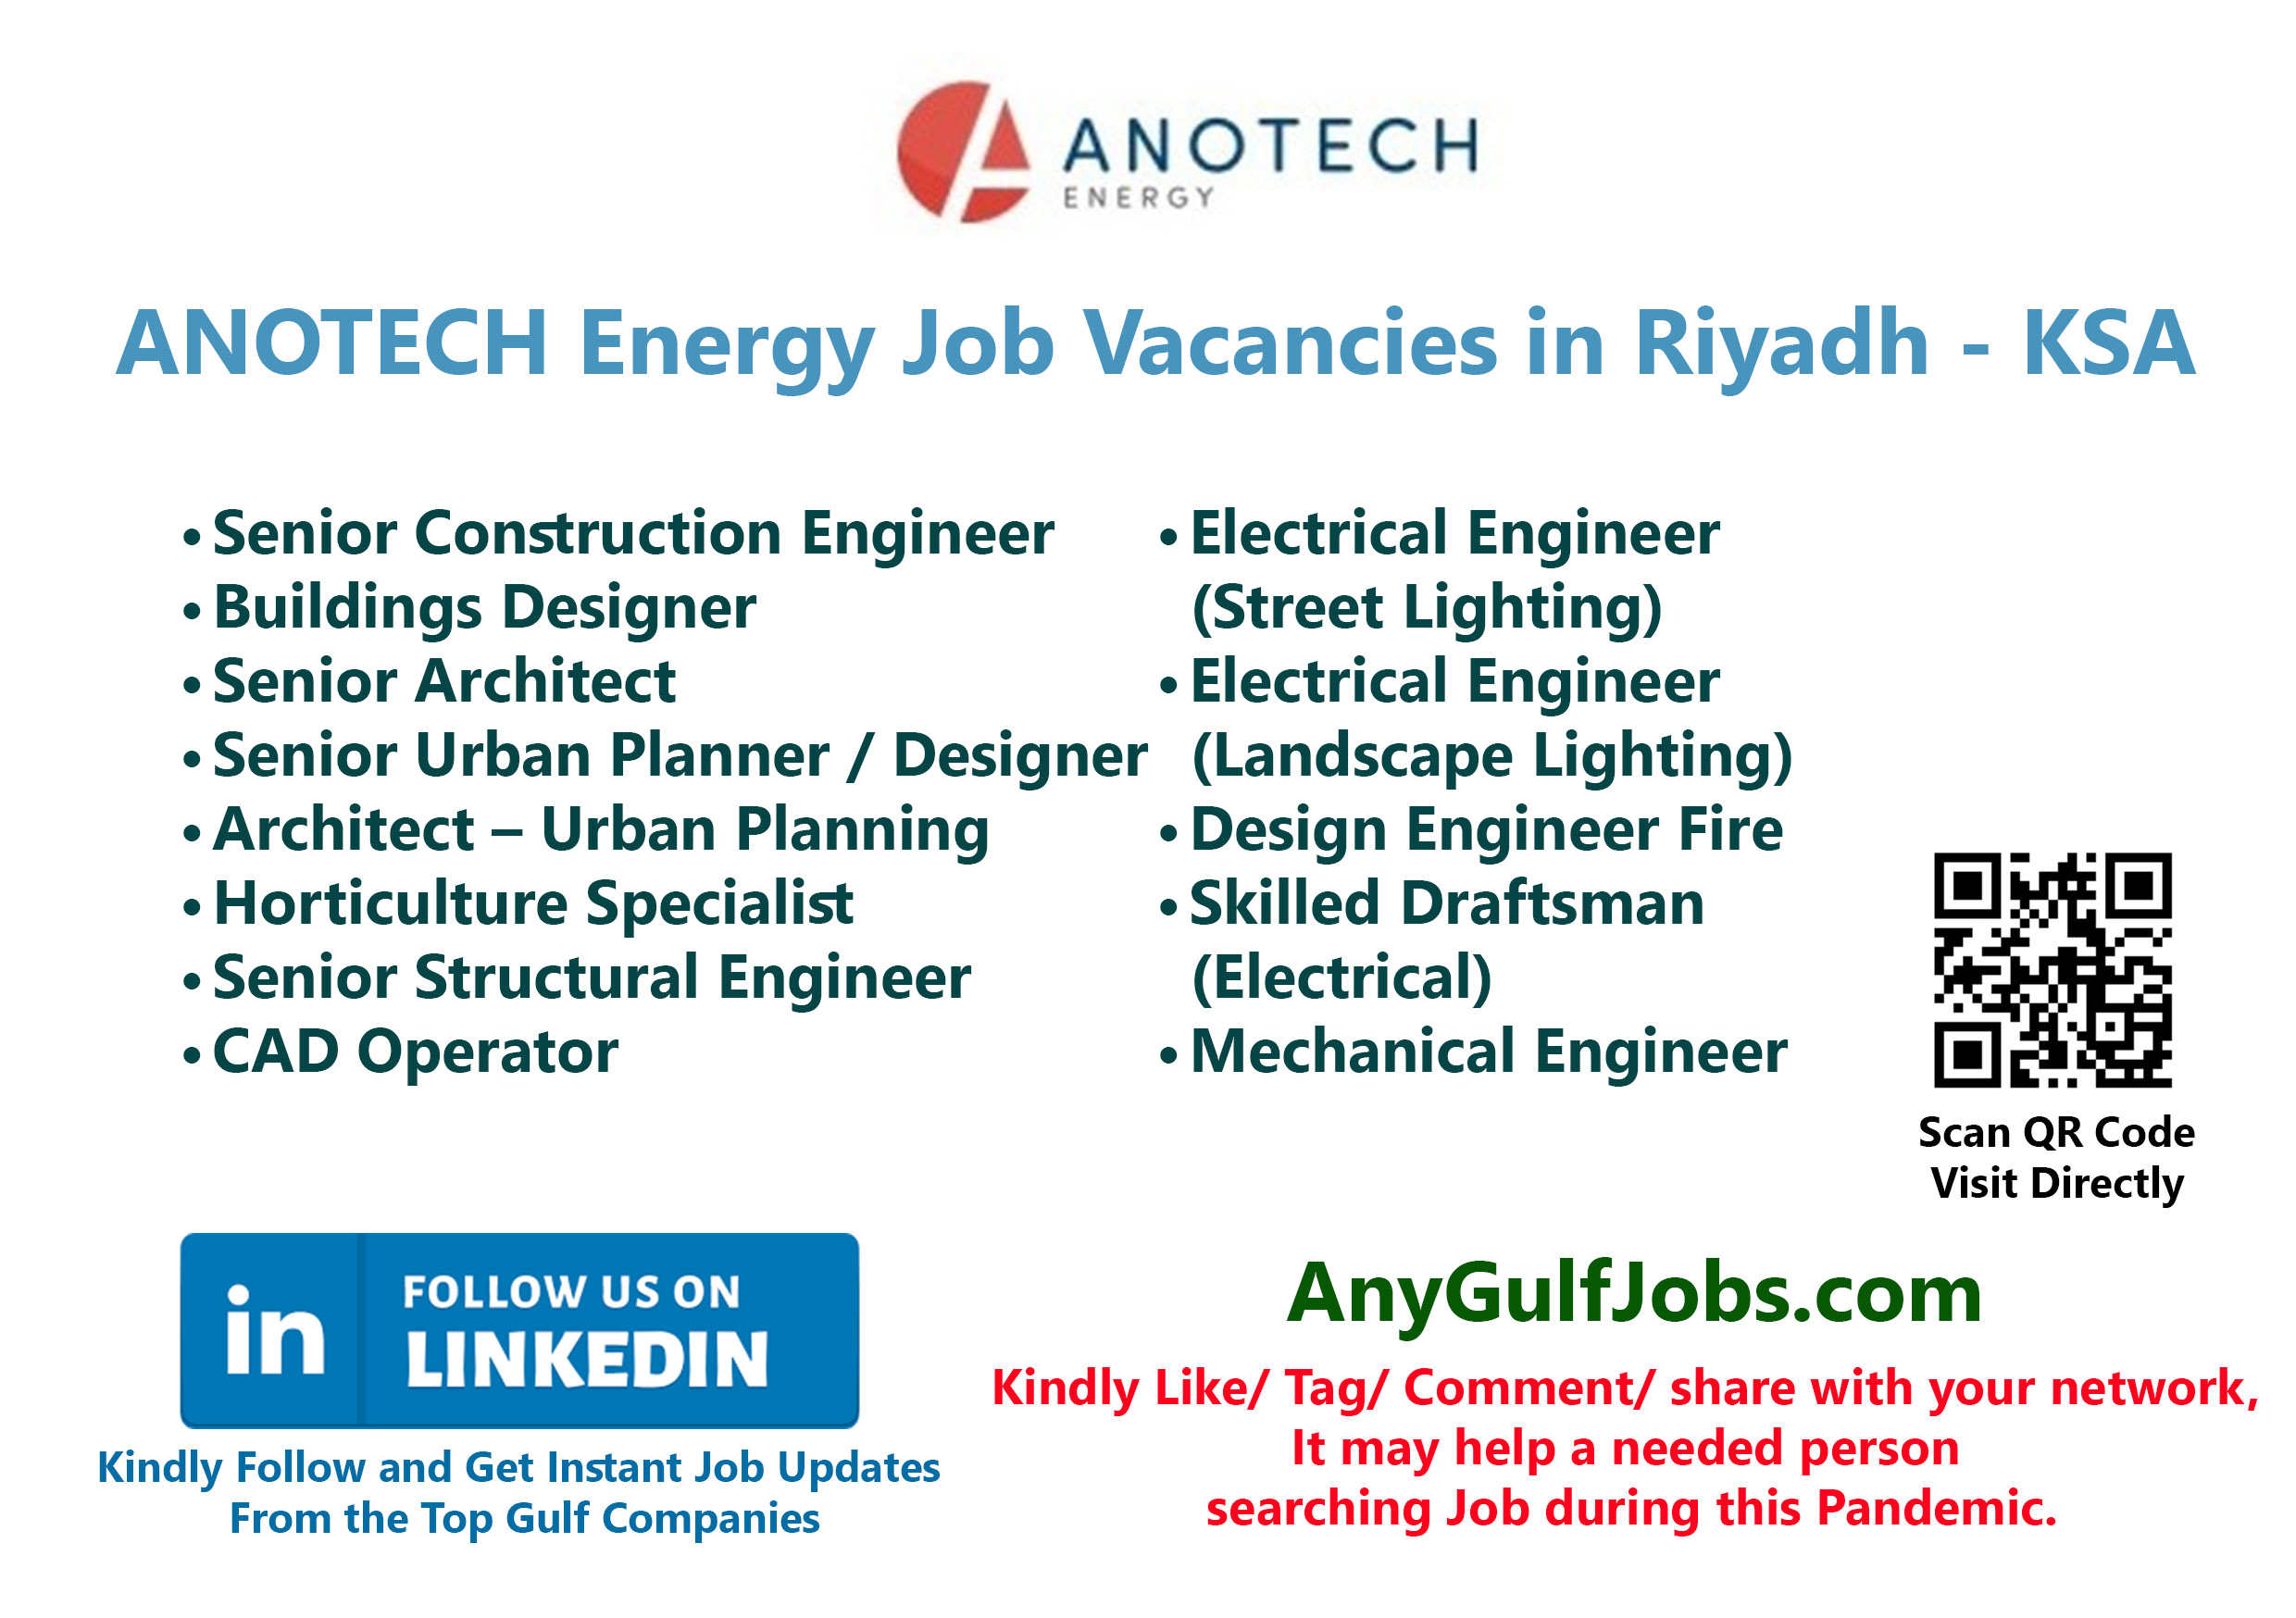 ANOTECH Energy Job Vacancies in Riyadh, Saudi Arabia